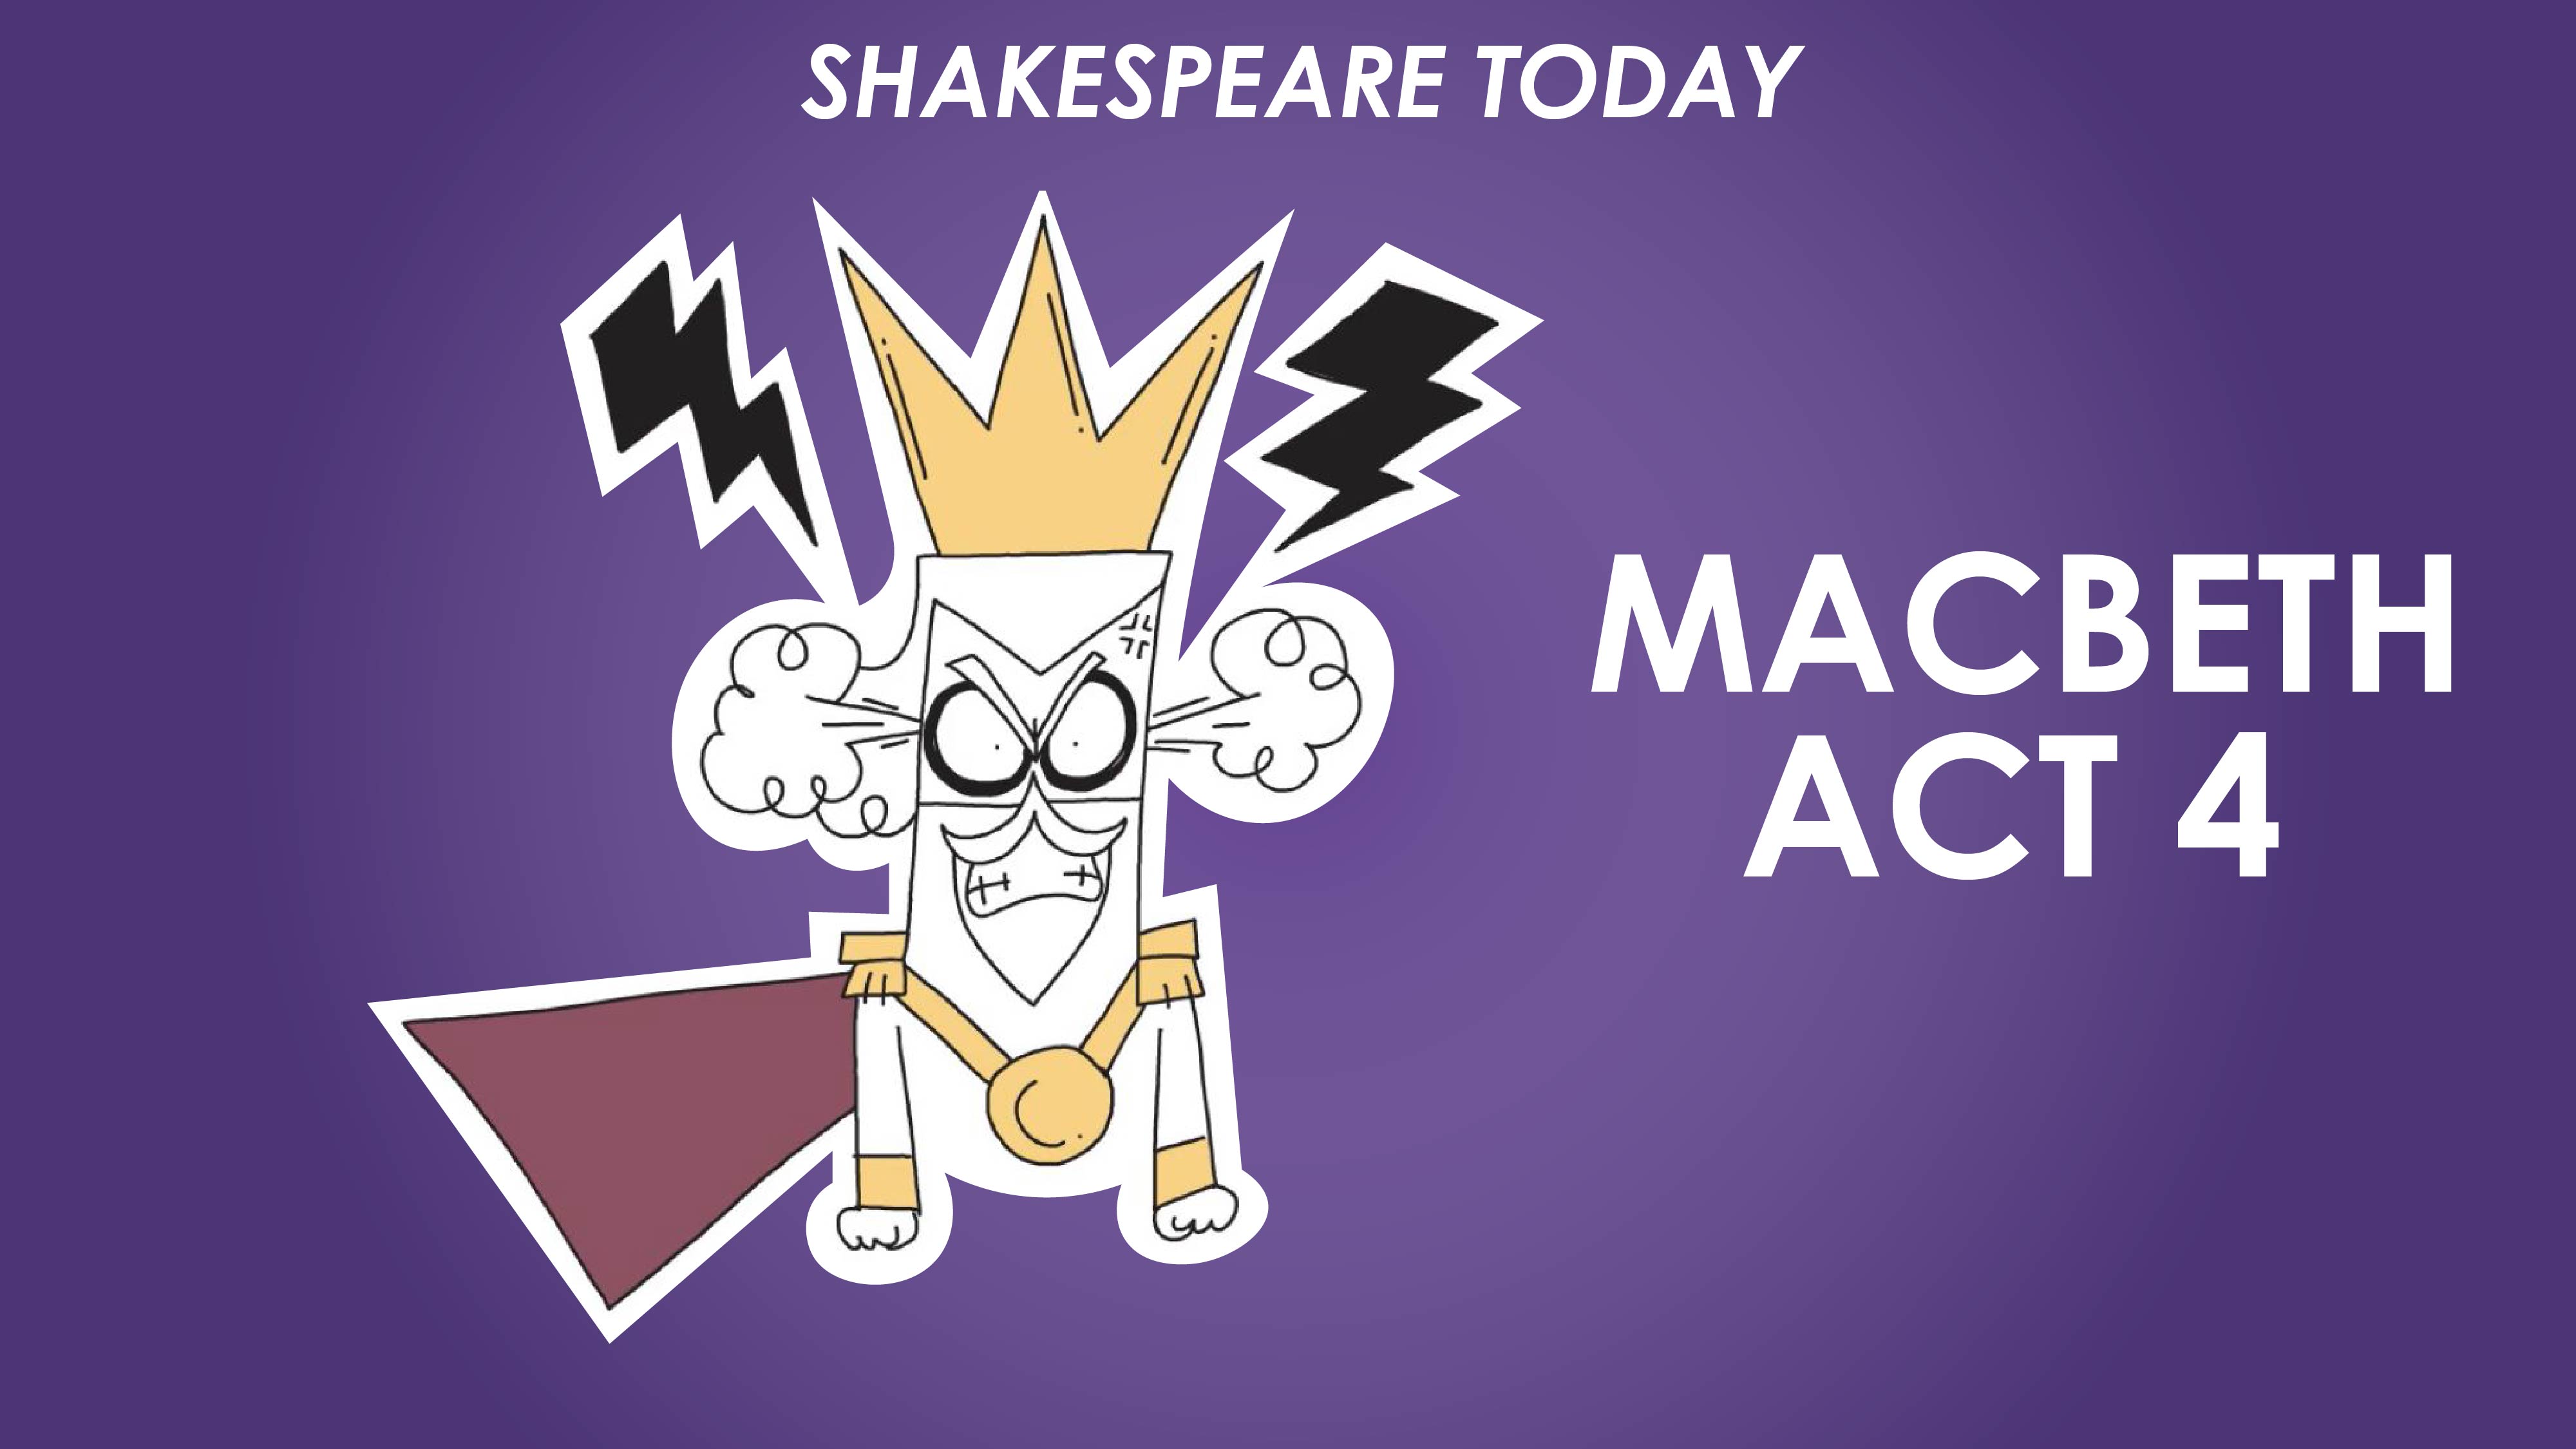 Macbeth Act 4 Summary - Shakespeare Today Series